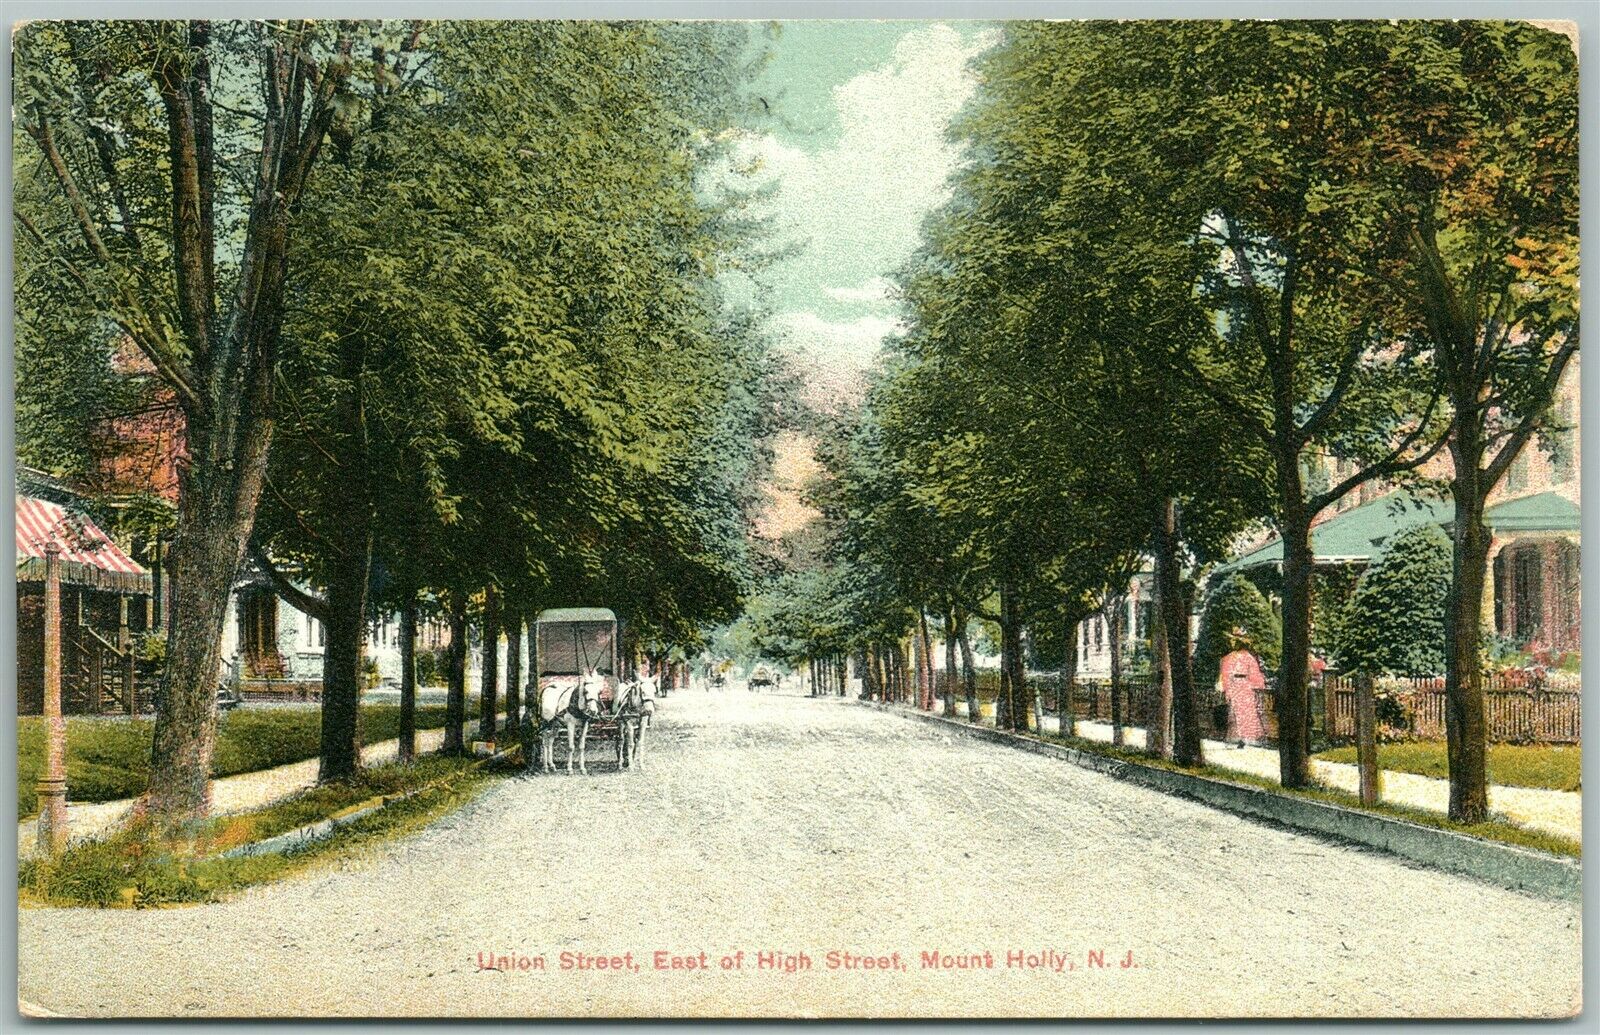 Mount Holly - Union Street - c 1910